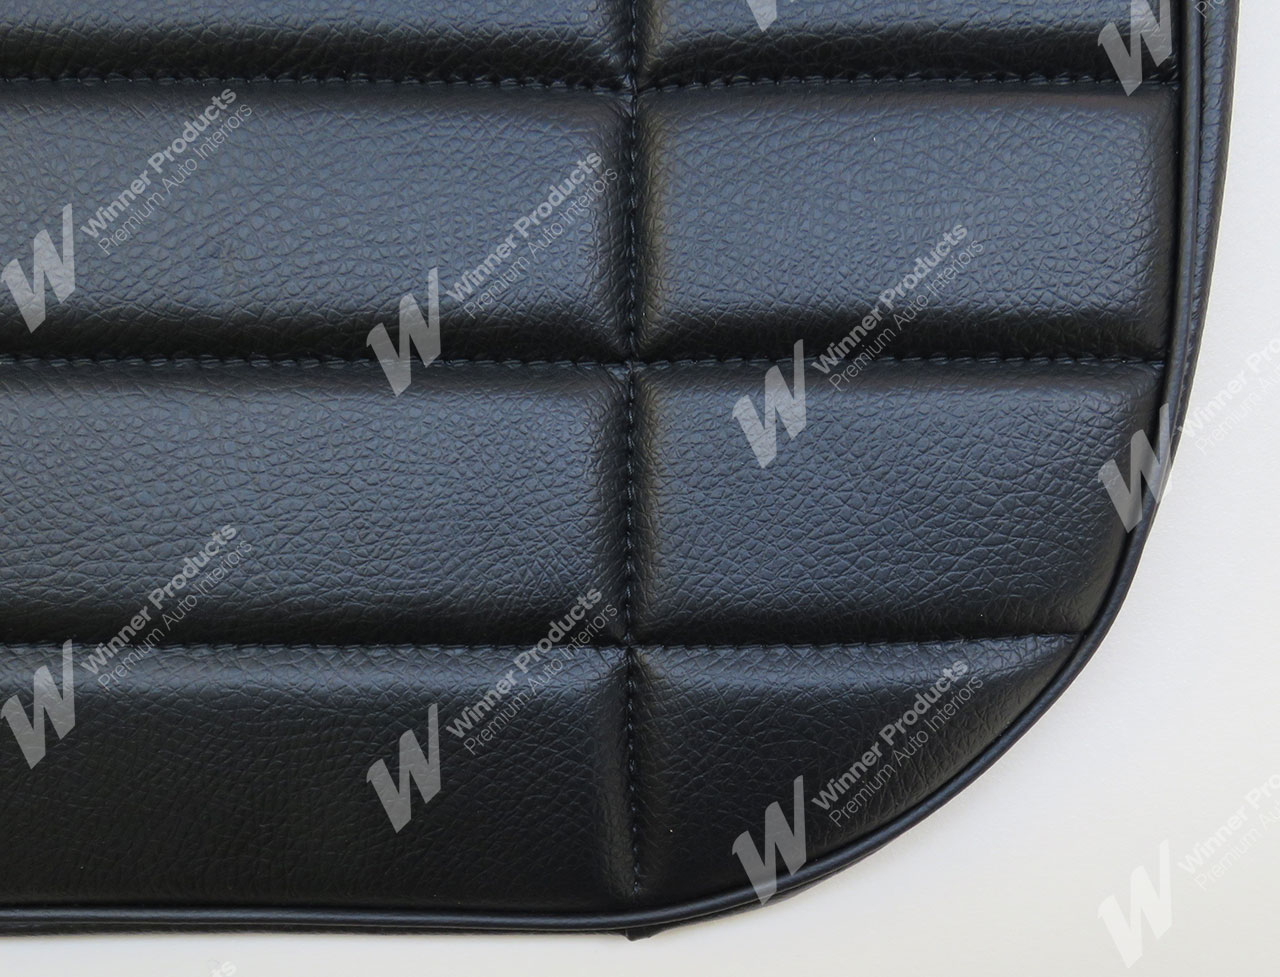 Holden Torana LC Torana GTR Coupe 40V Black Seat Covers (Image 4 of 4)